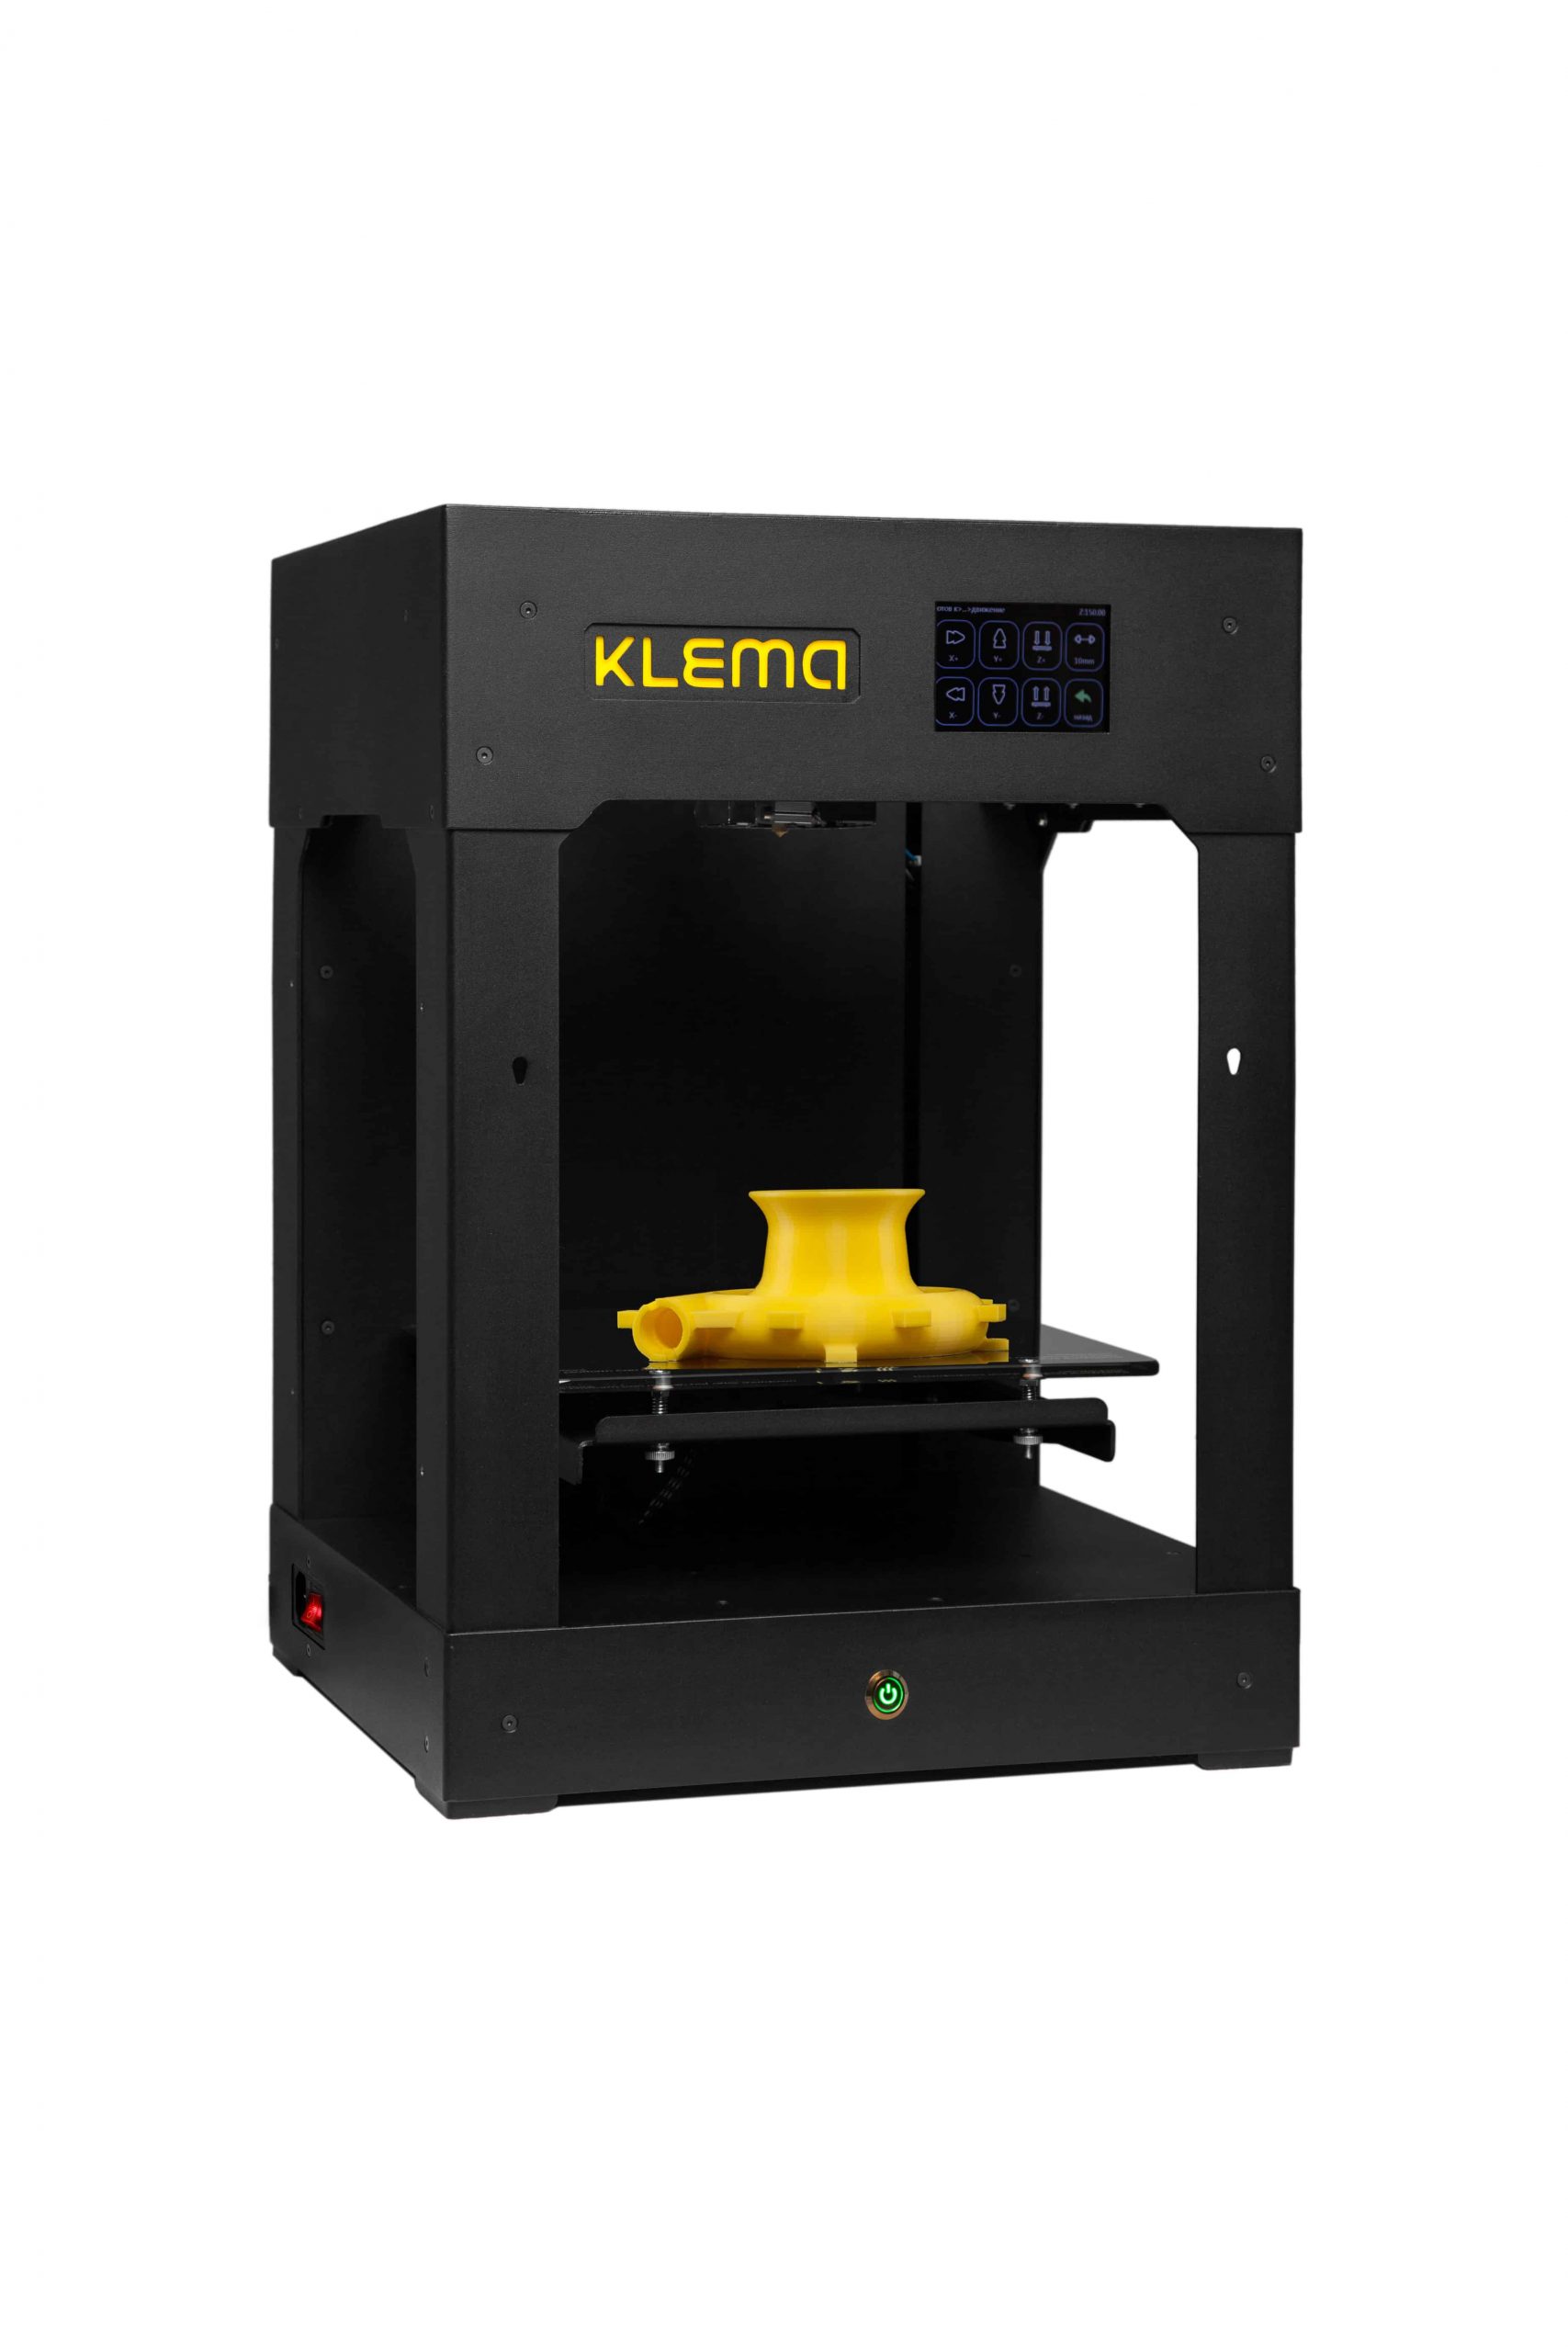 3D printer KLEMA 180 inexpensively order